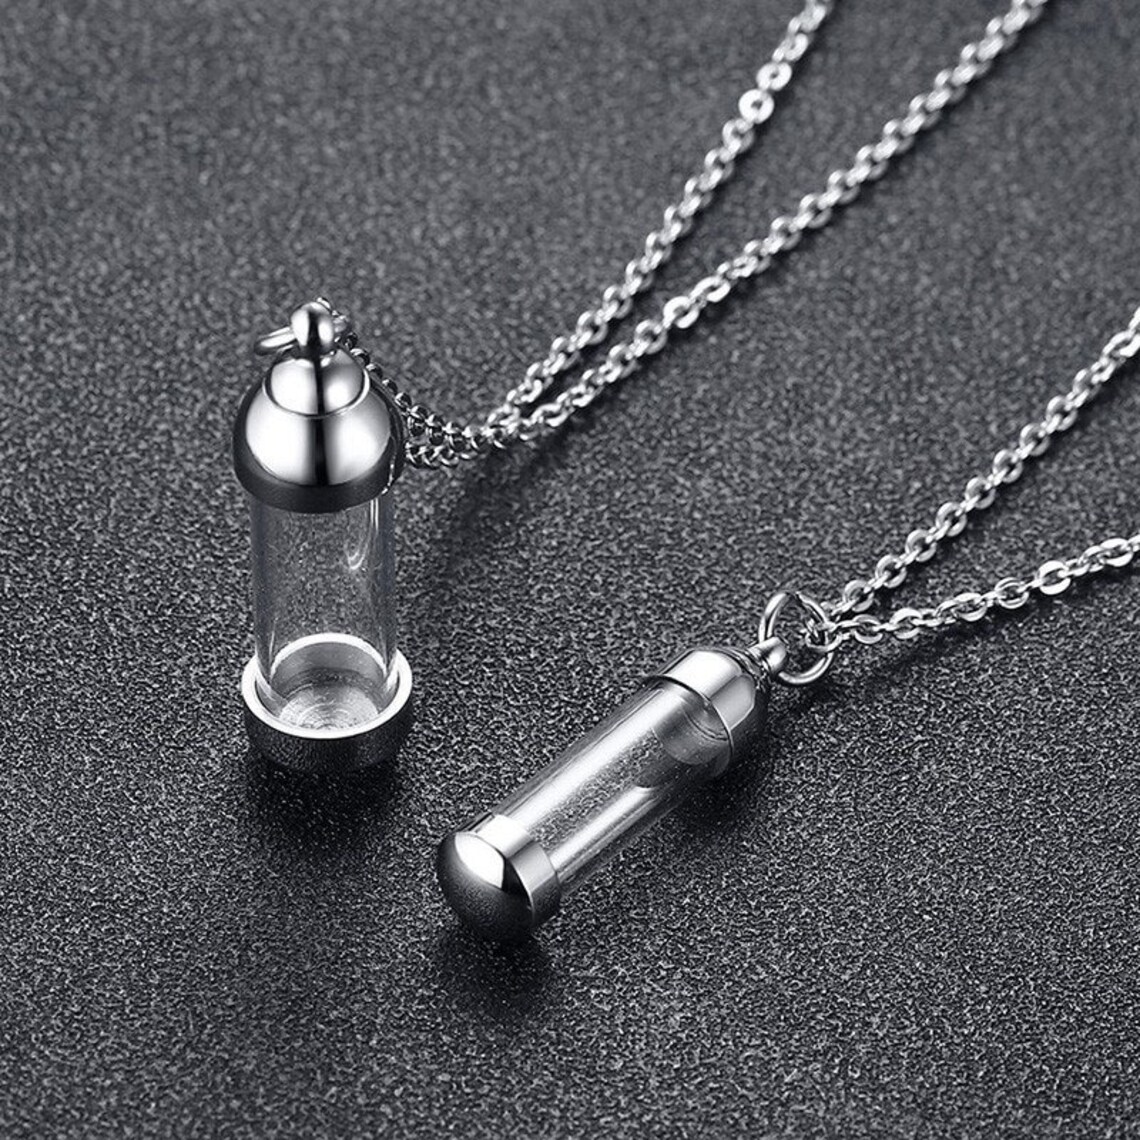 Stash Necklace Vial Necklace Cremation Necklace Secret | Etsy